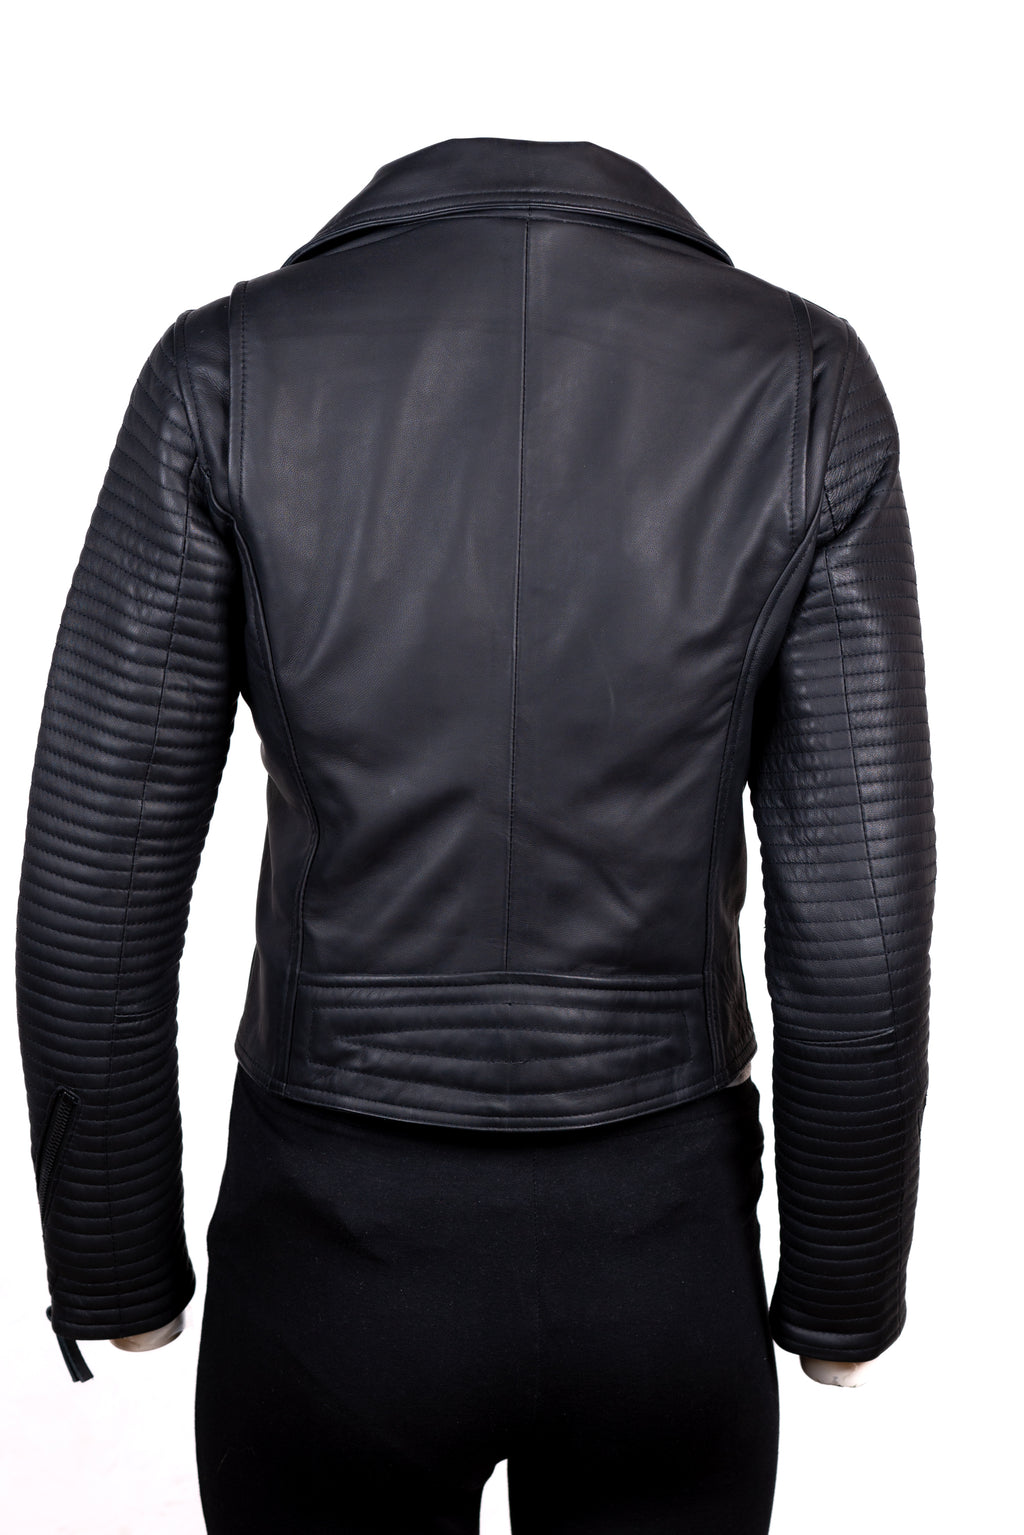 Ladies Matte Black Asymmetric Panelled Biker Style Leather Jacket: Carmen